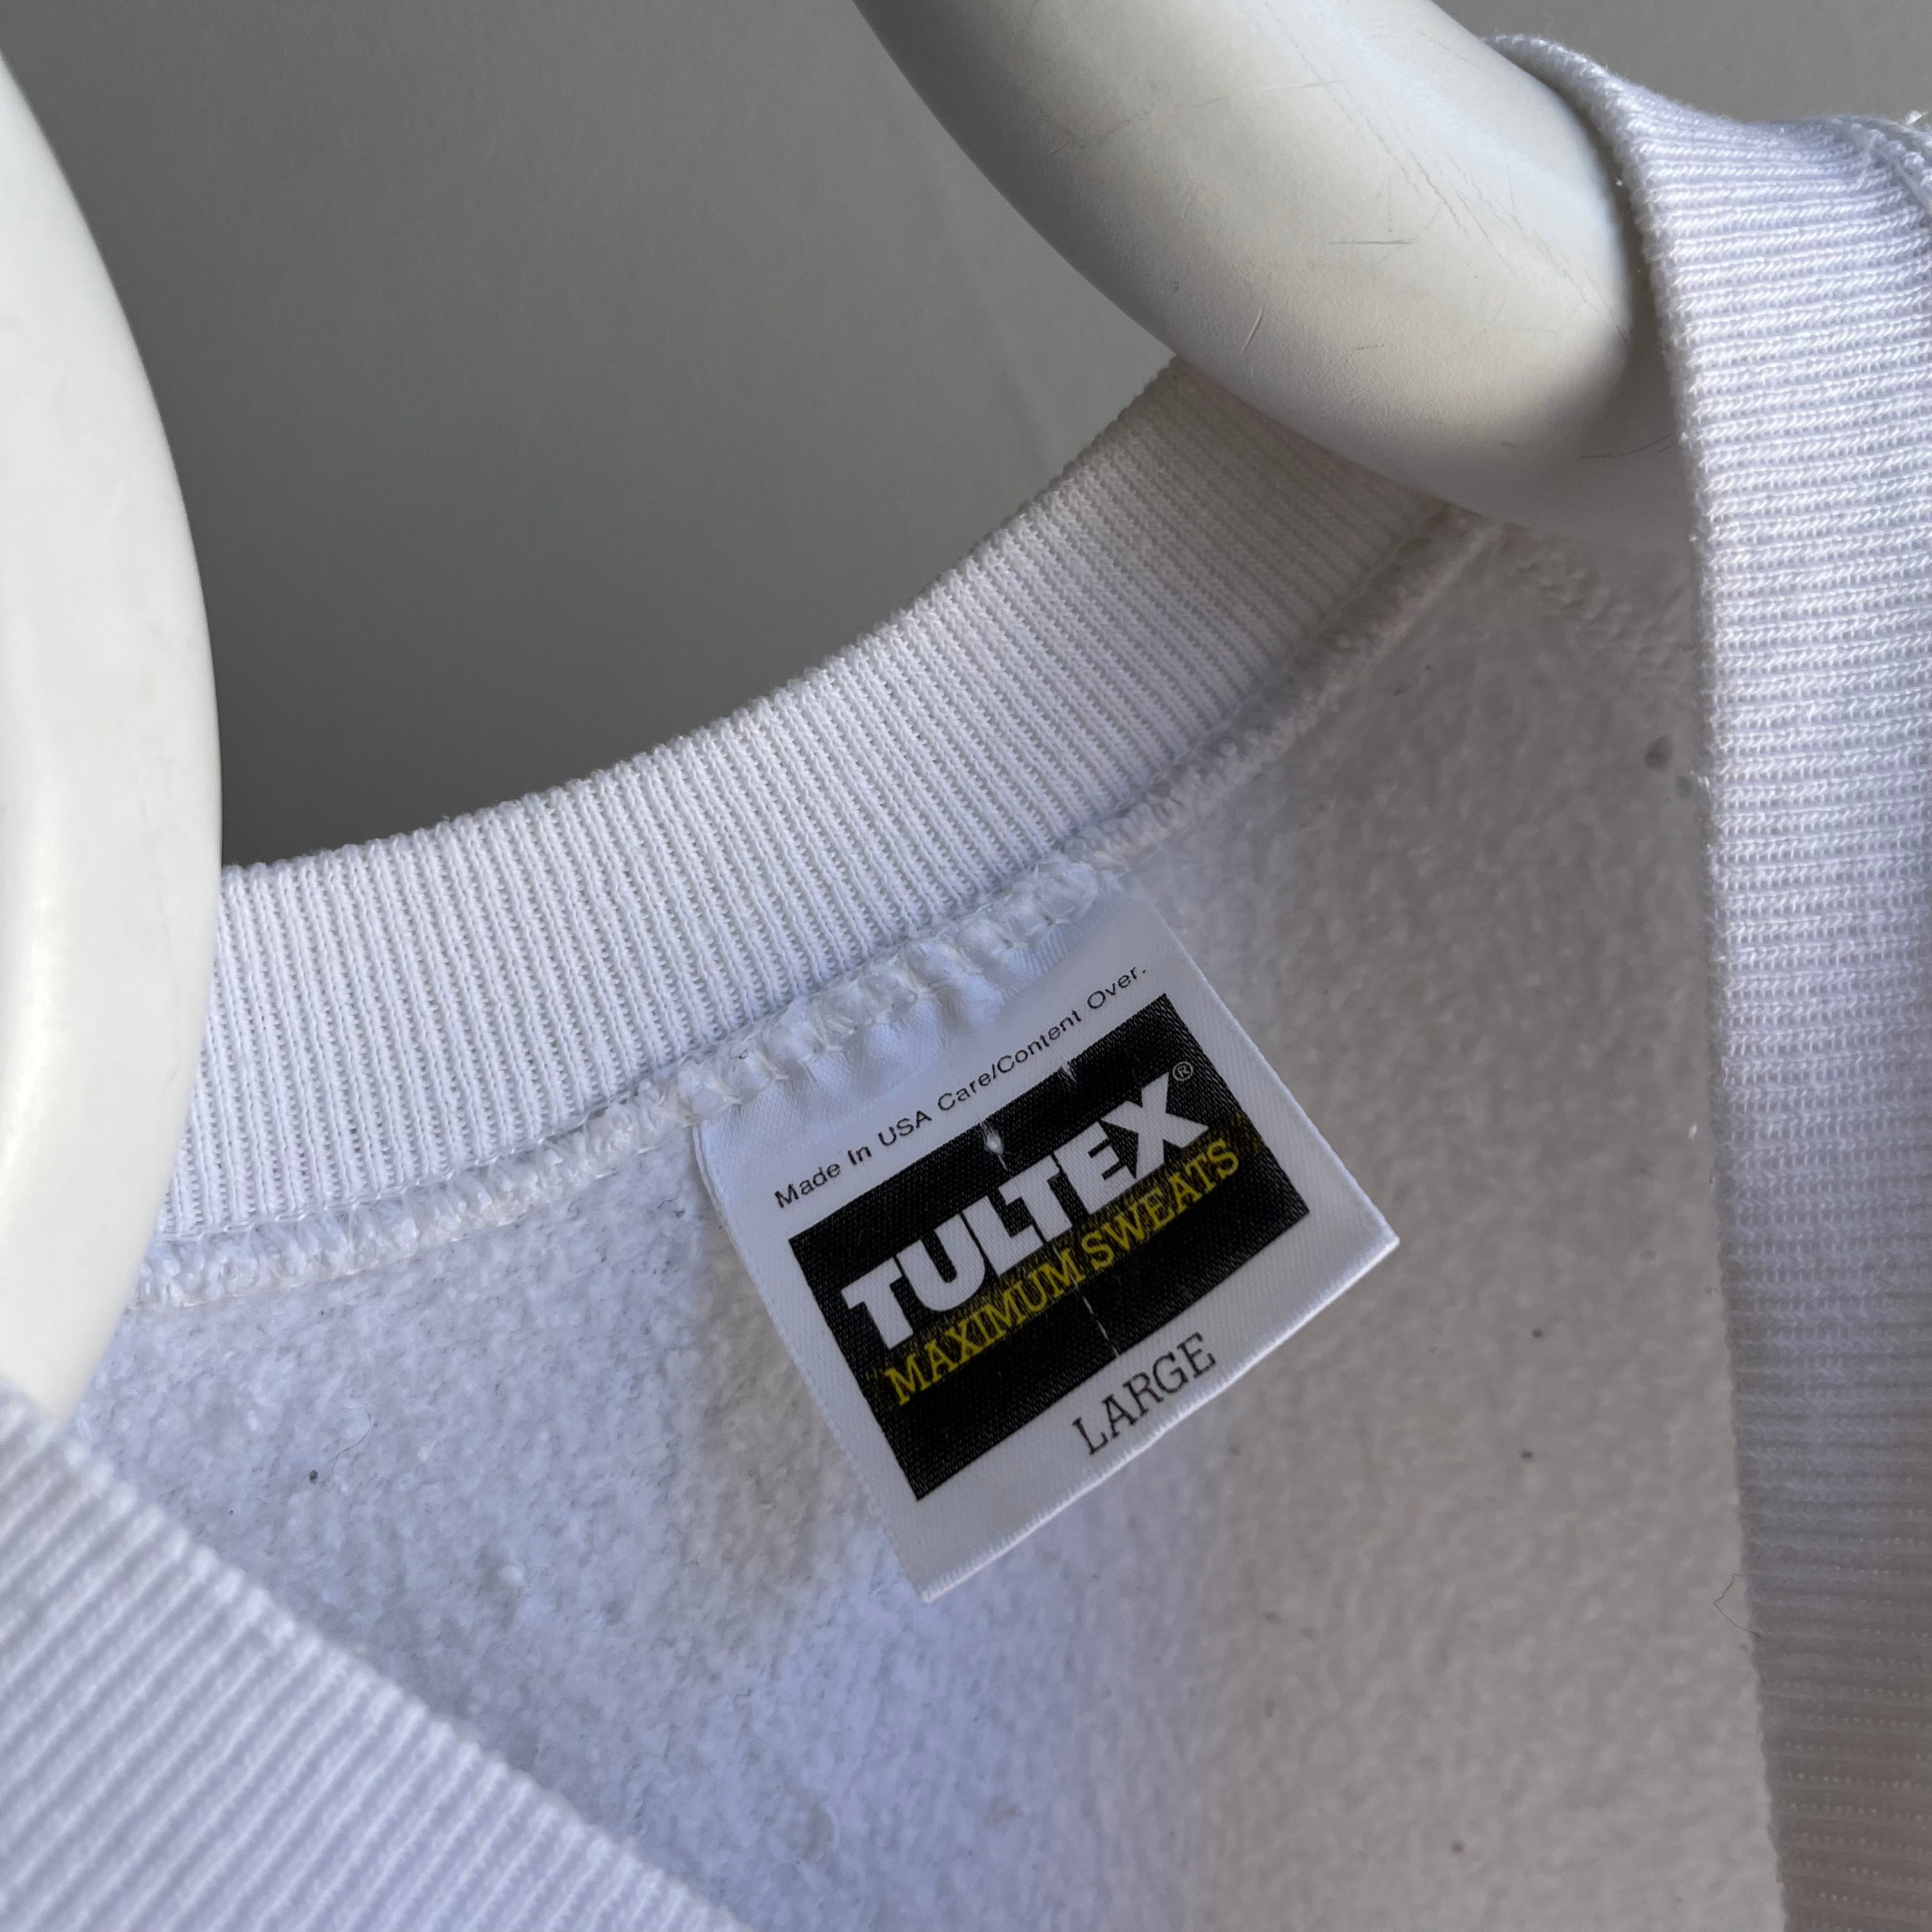 1990s Blank White Raglan Sweatshirt by Tultex